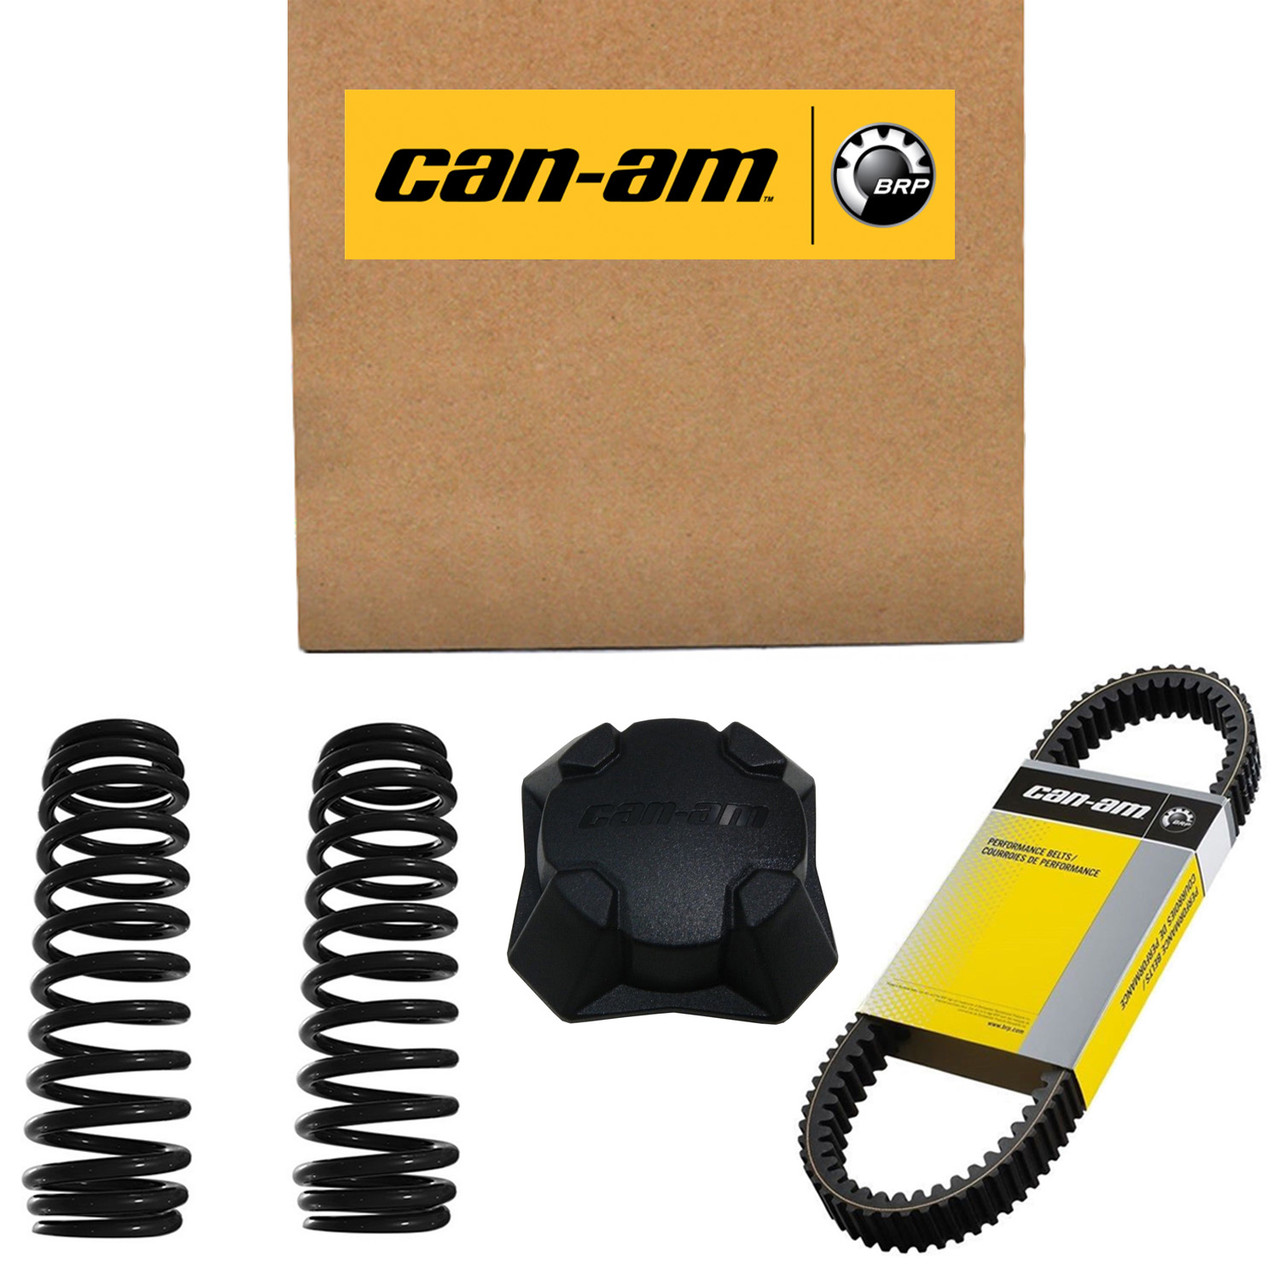 Can-Am New OEM Gear Box, 420686211